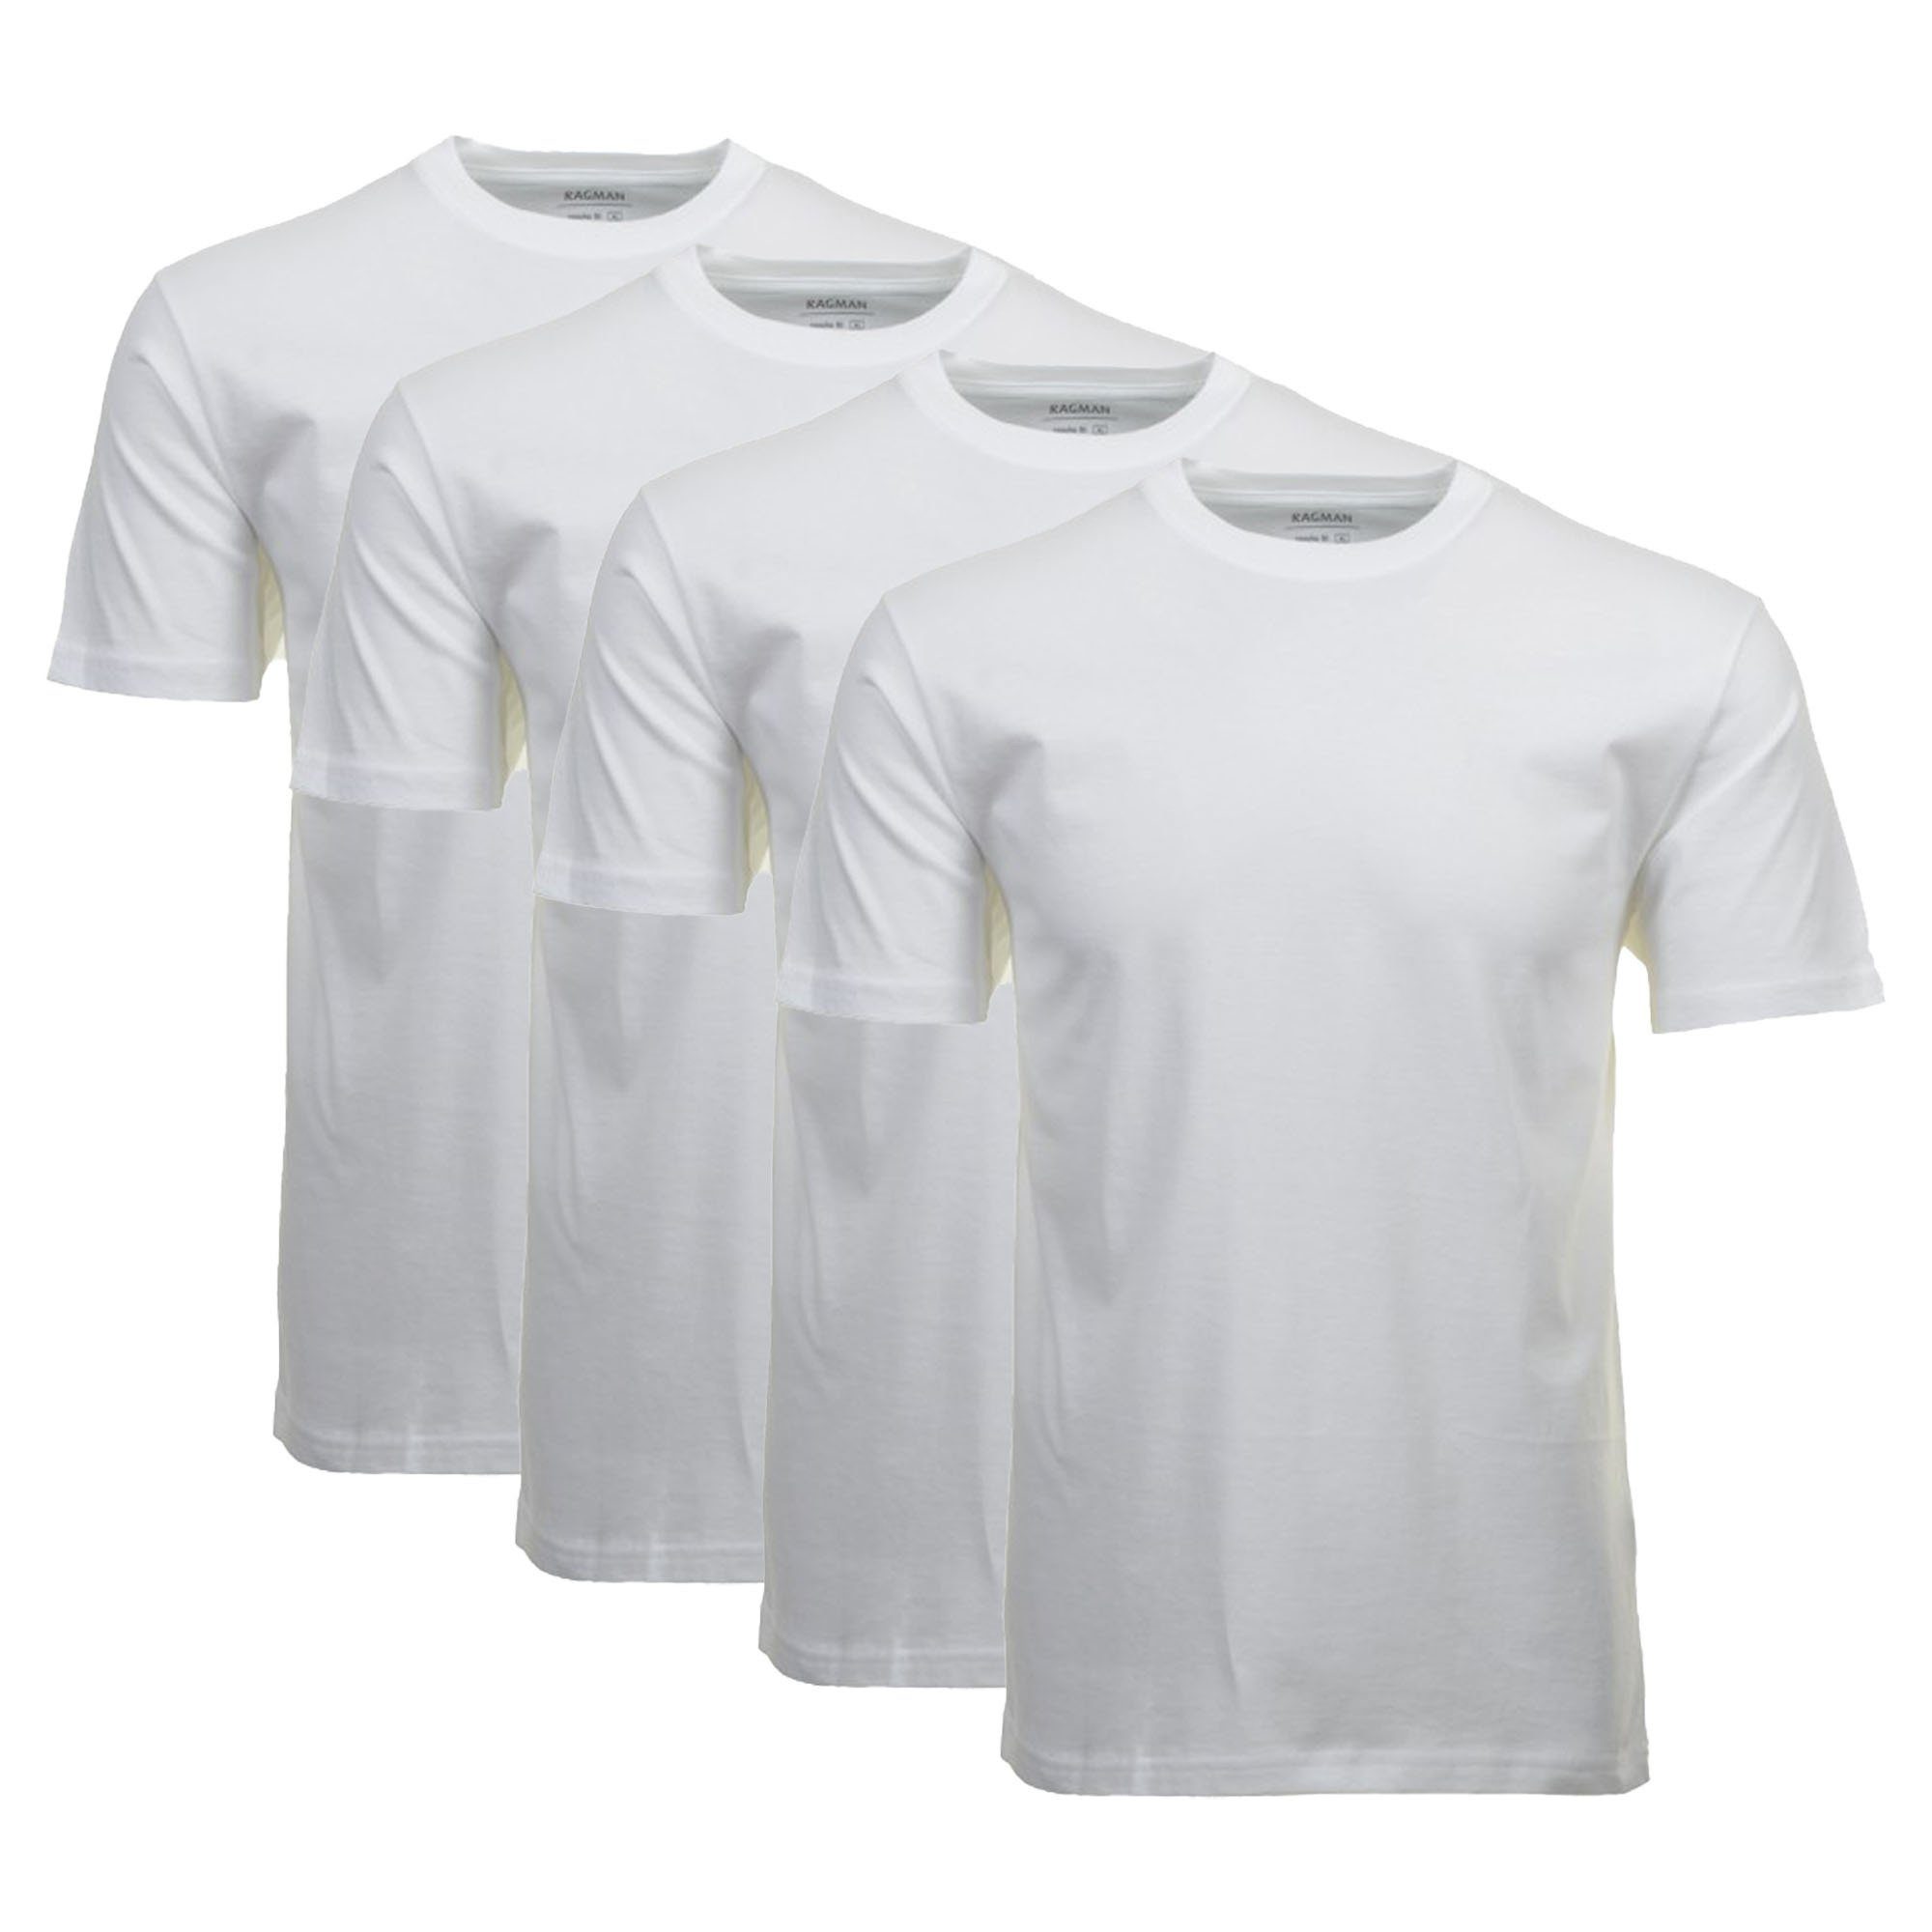 RAGMAN Unterhemd Herren T-Shirt 2er Pack - 1/2 Arm, Unterhemd Weiß